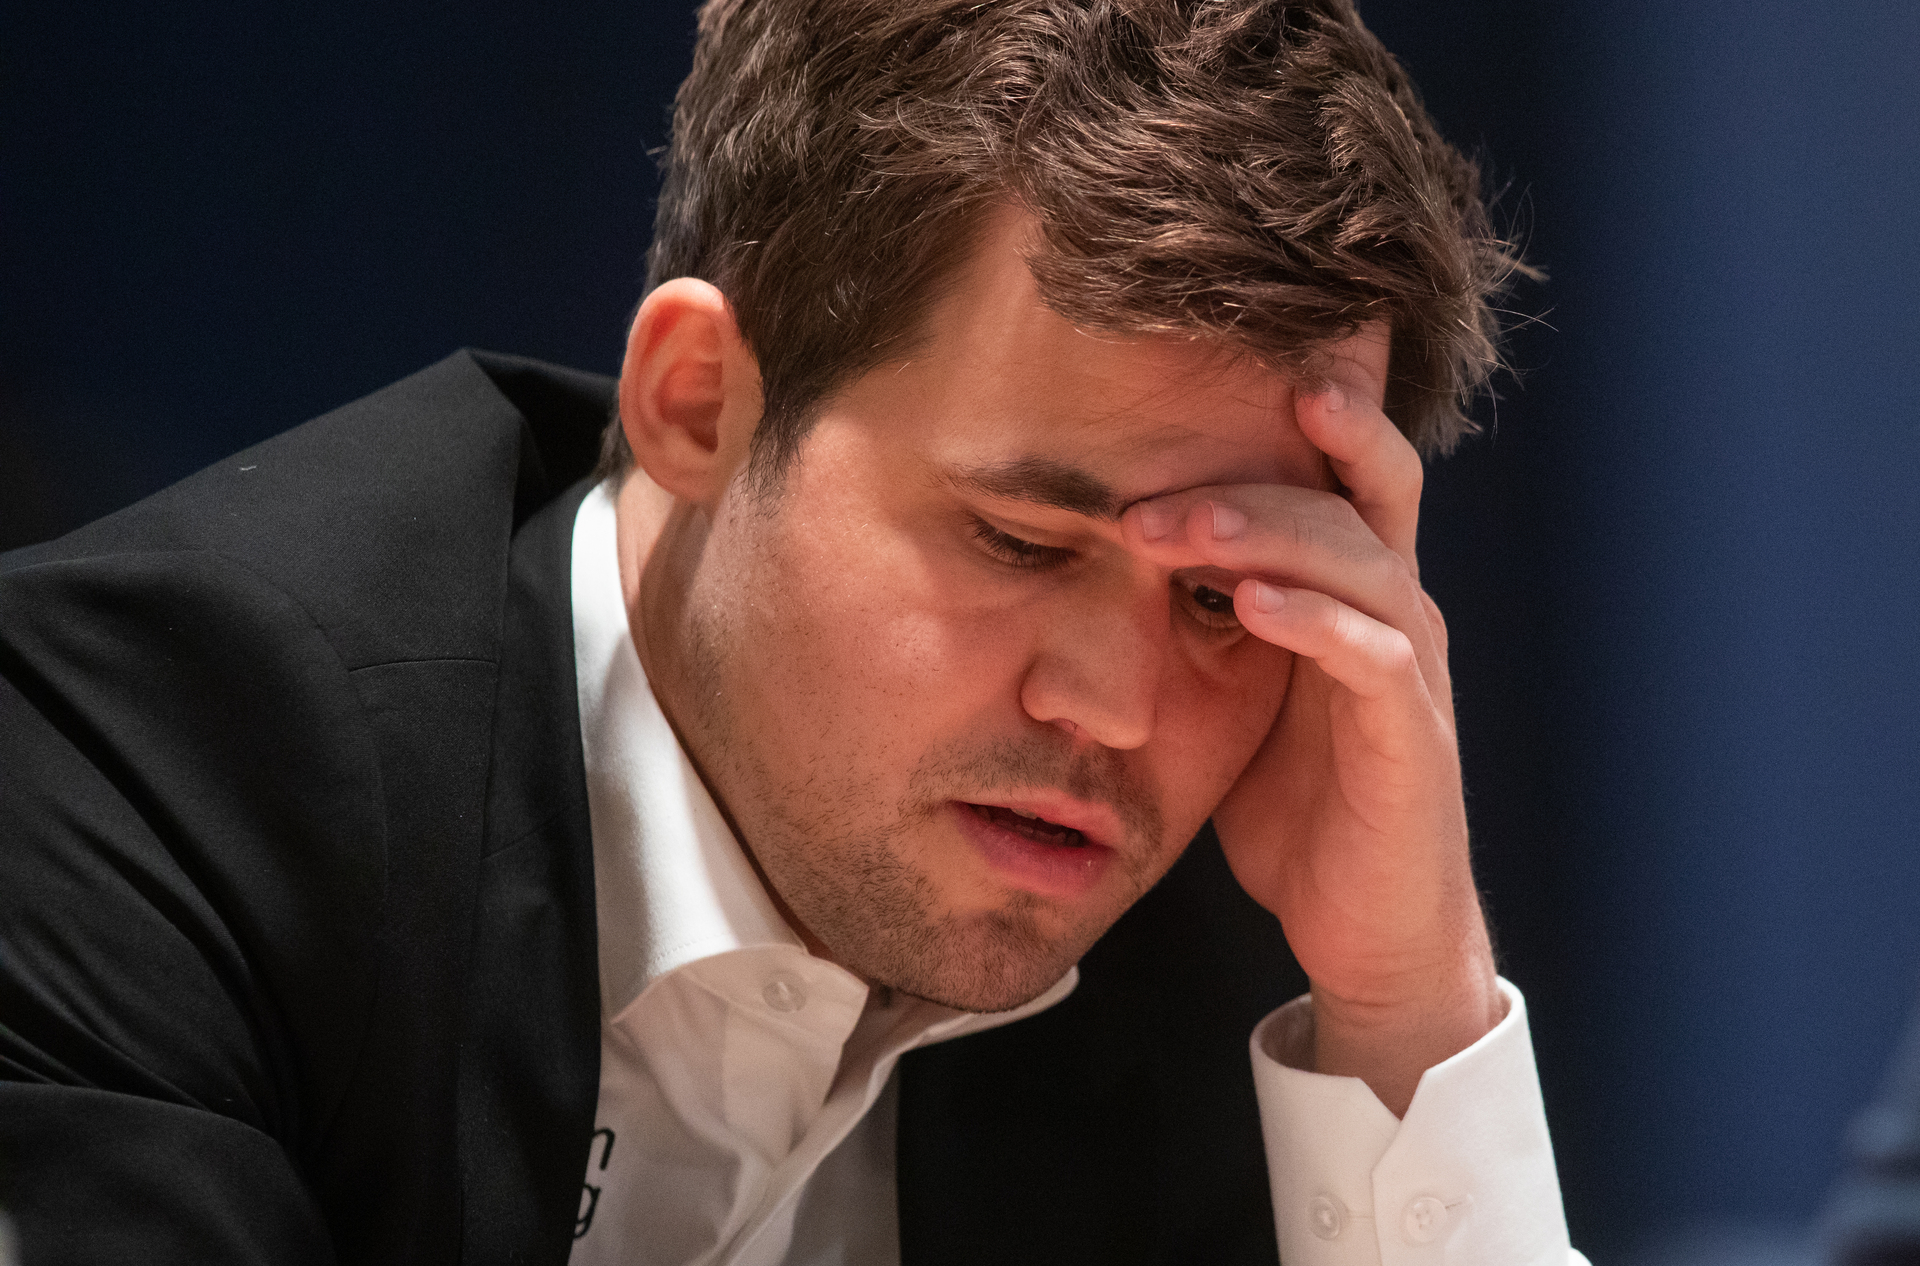 The moment Magnus Carlsen resigned against Anish Giri, exactly 12